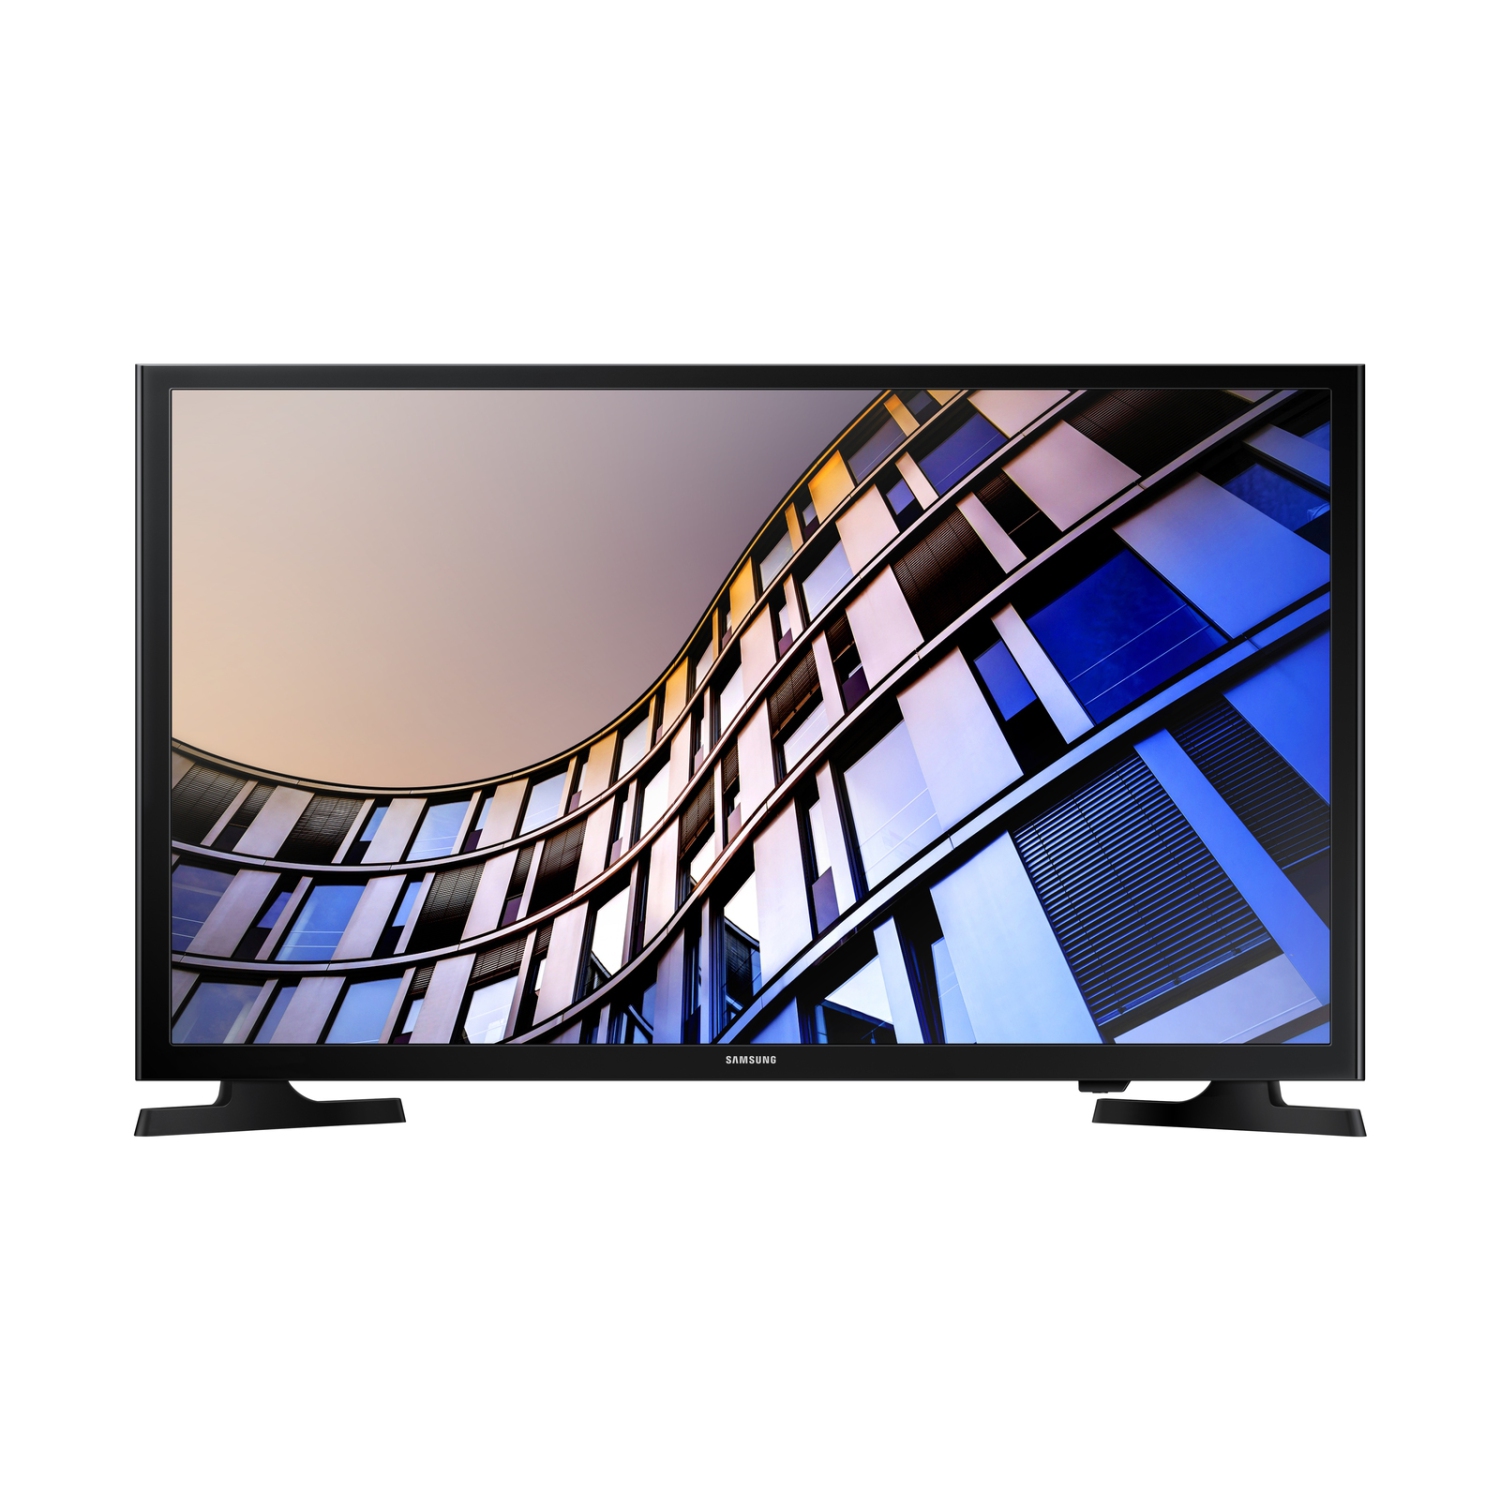 Refurbished (Good) - SAMSUNG UN32M4500 32" CLASS M4500 720P HD SMART LED TV (2017)